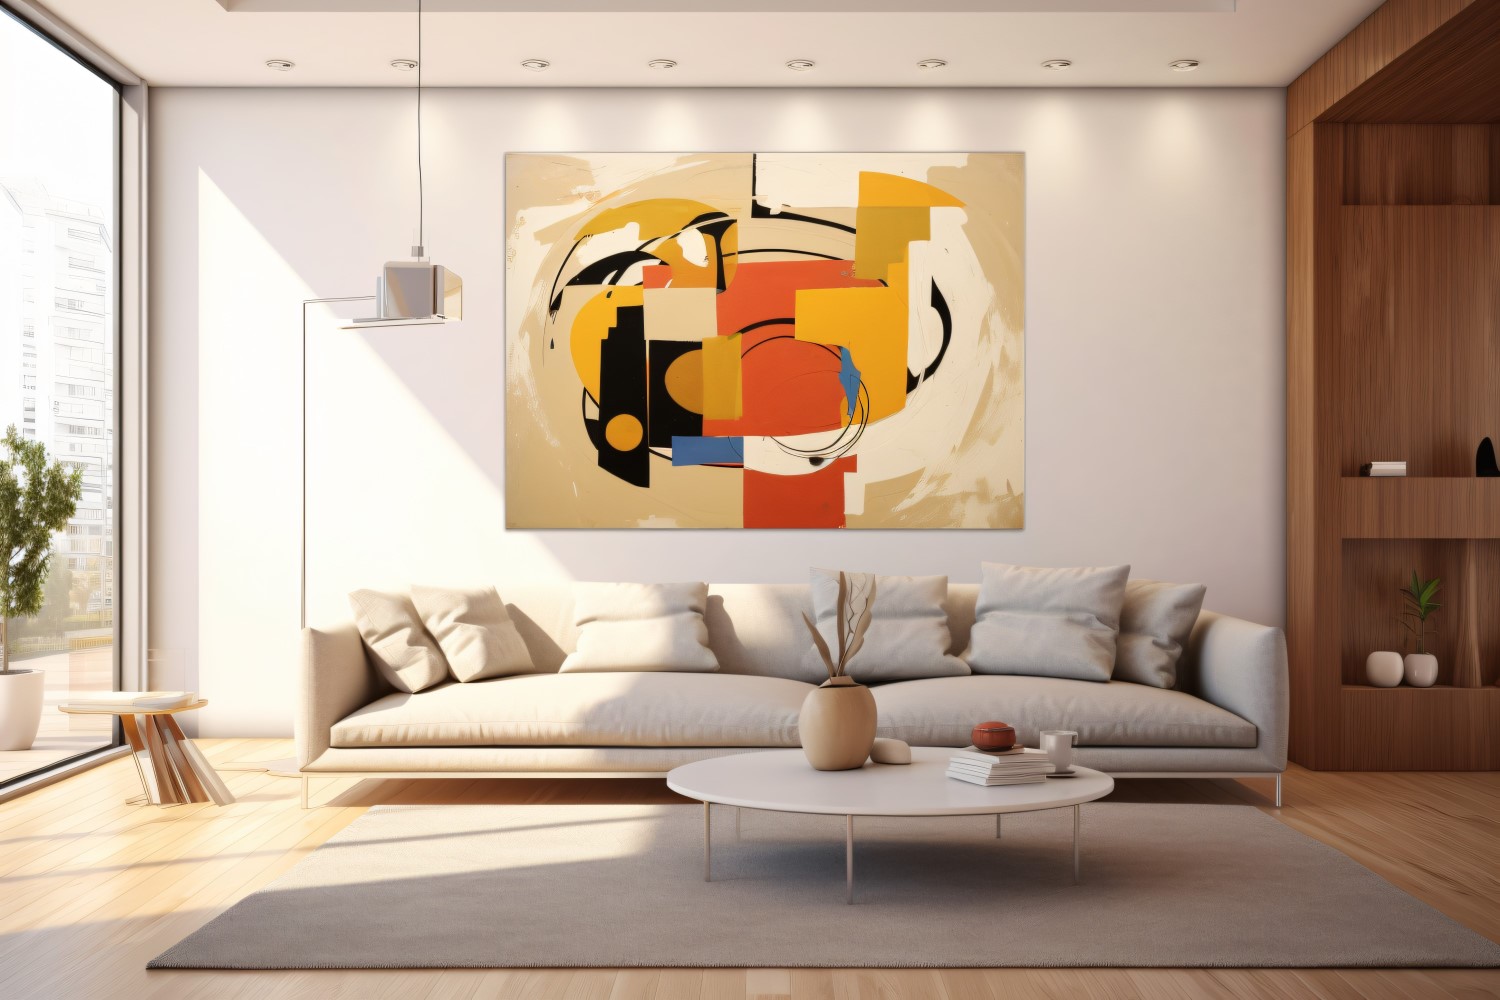 Italian Flair Luxurious Living Room Interiors 808